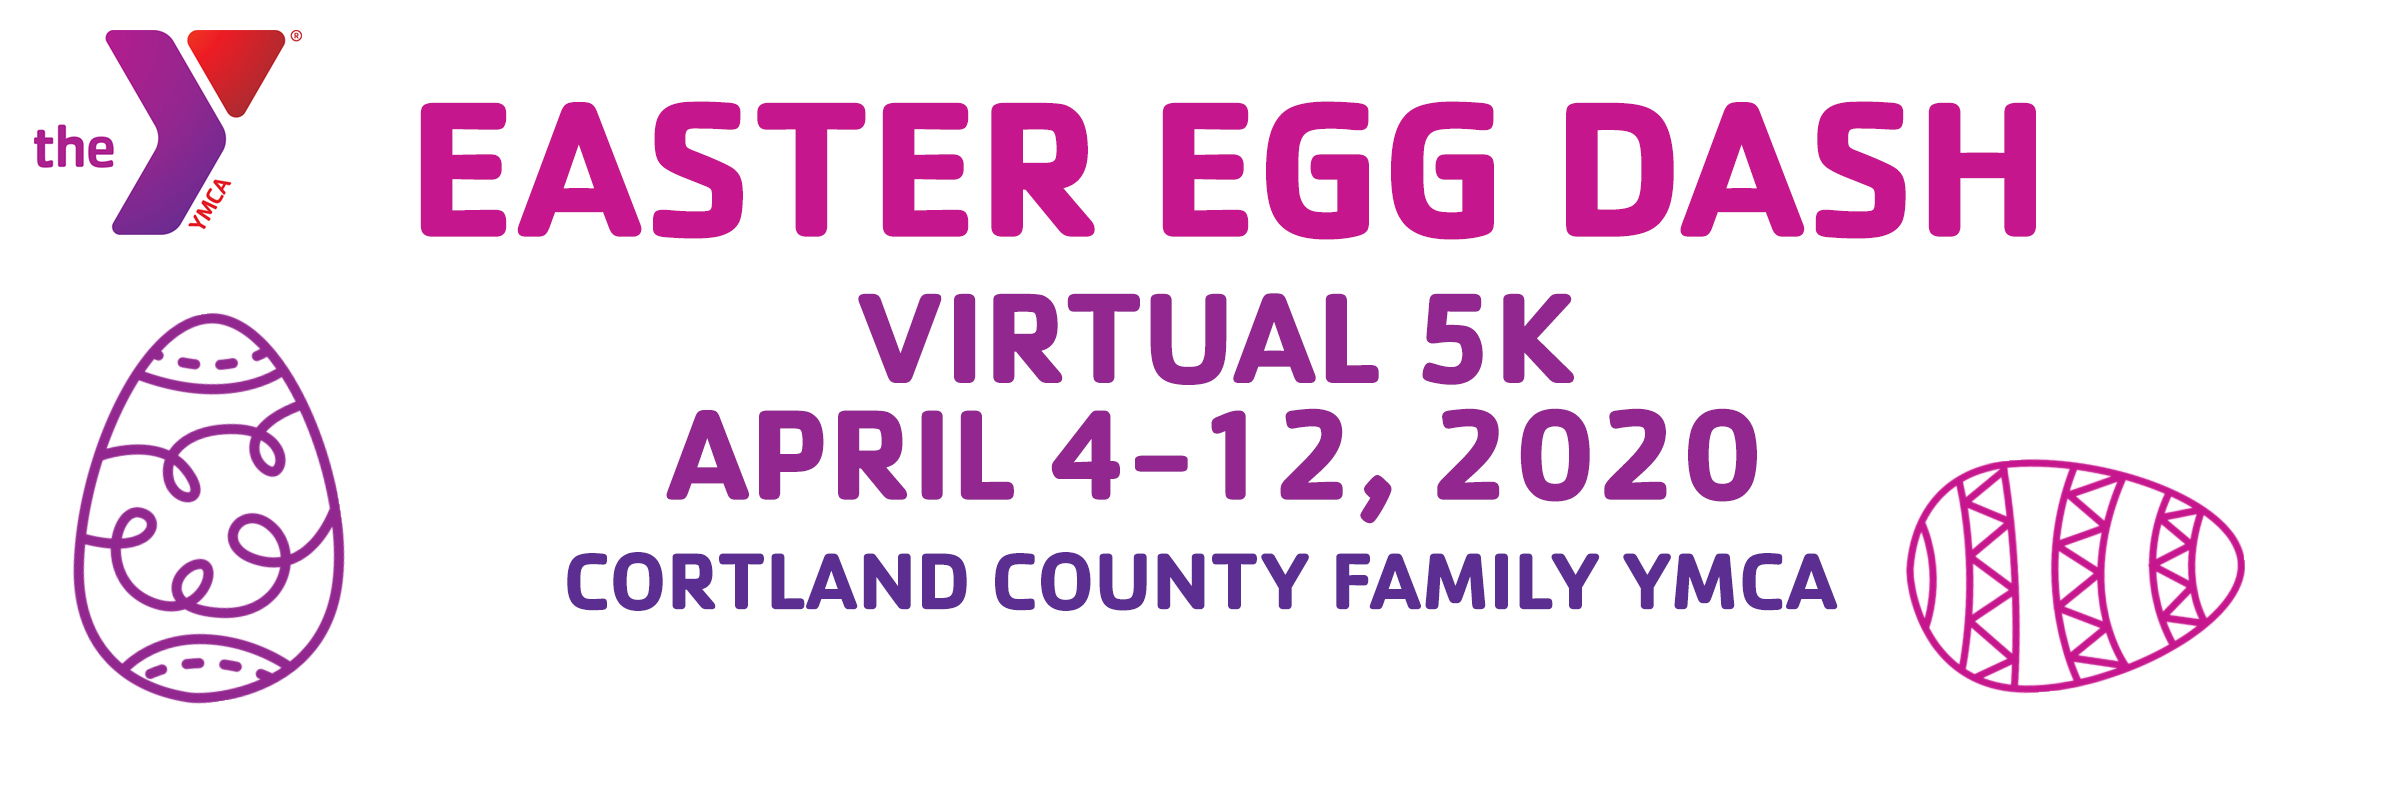 Easter Egg Dash Virtual 5k Cortland County Family YMCA